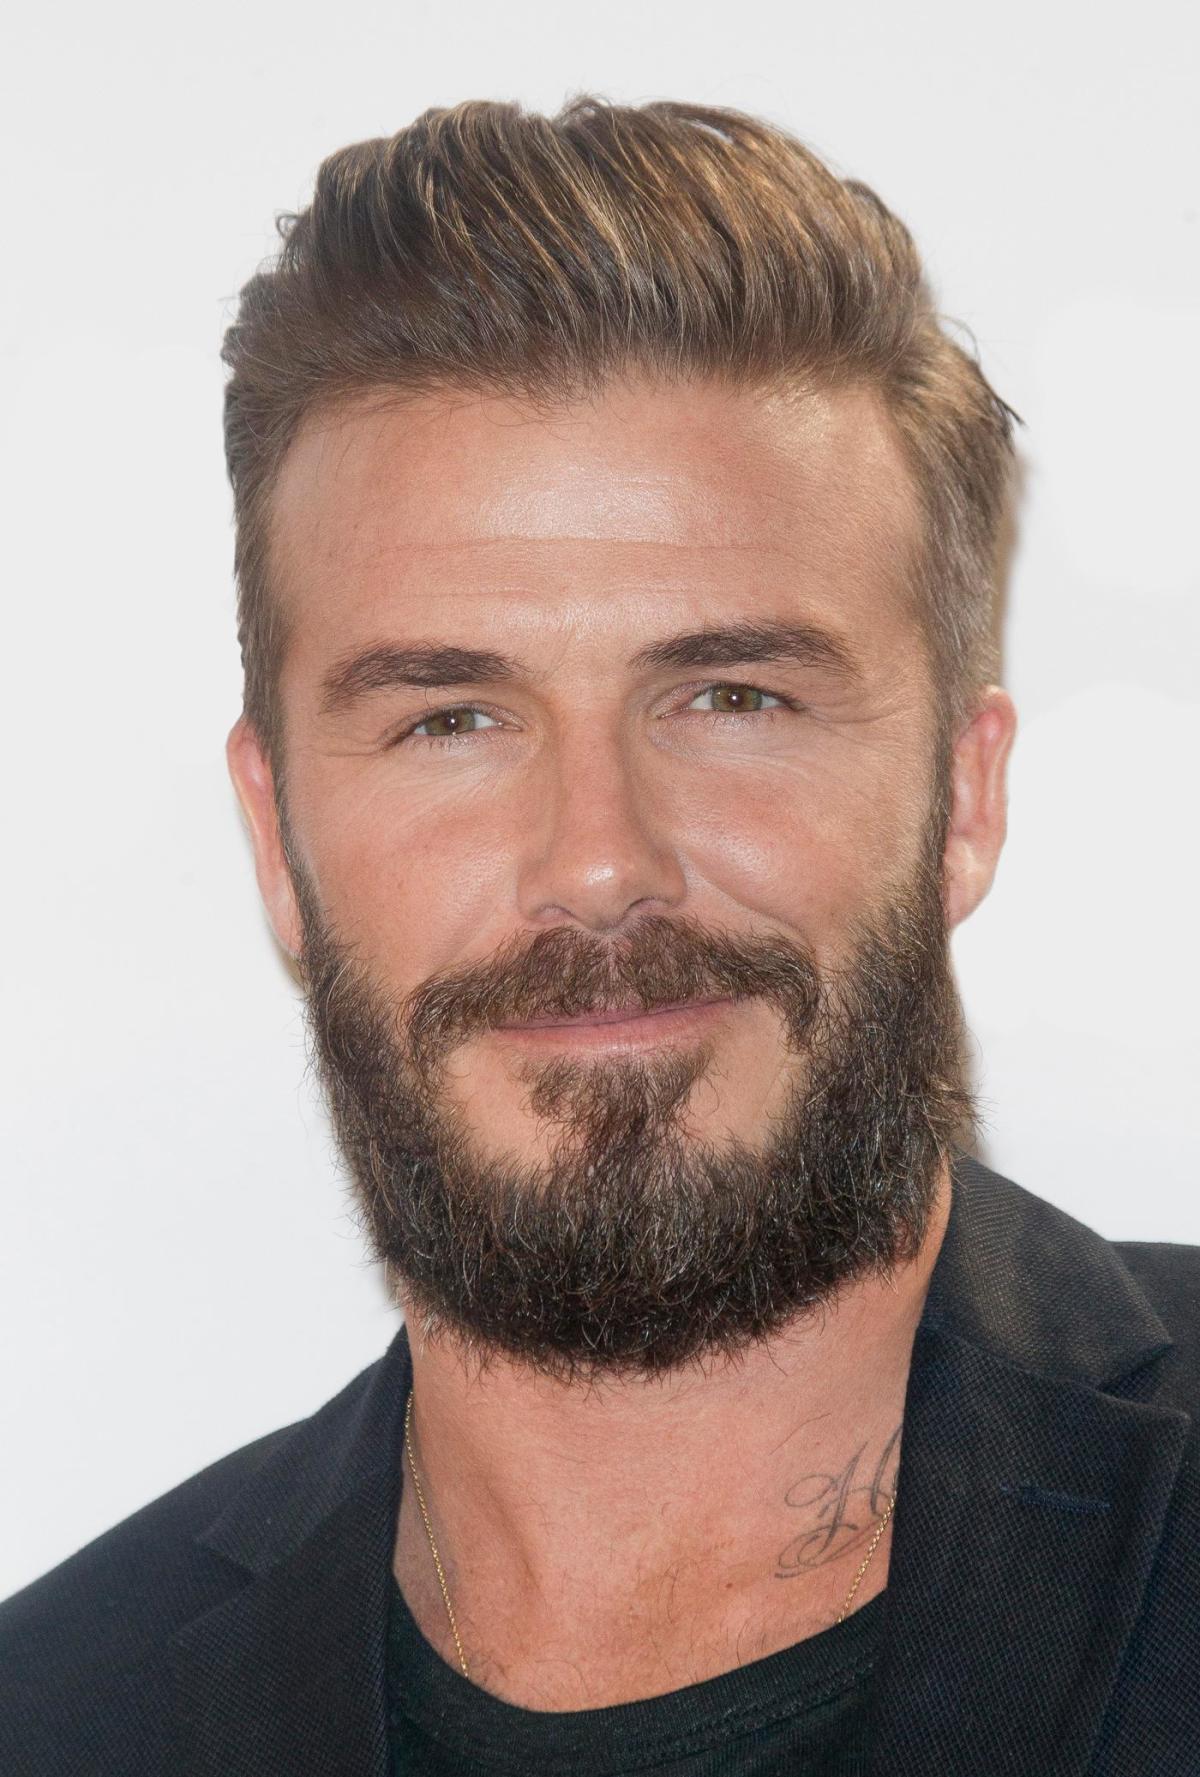 David Beckham Named People's Sexiest Man Alive